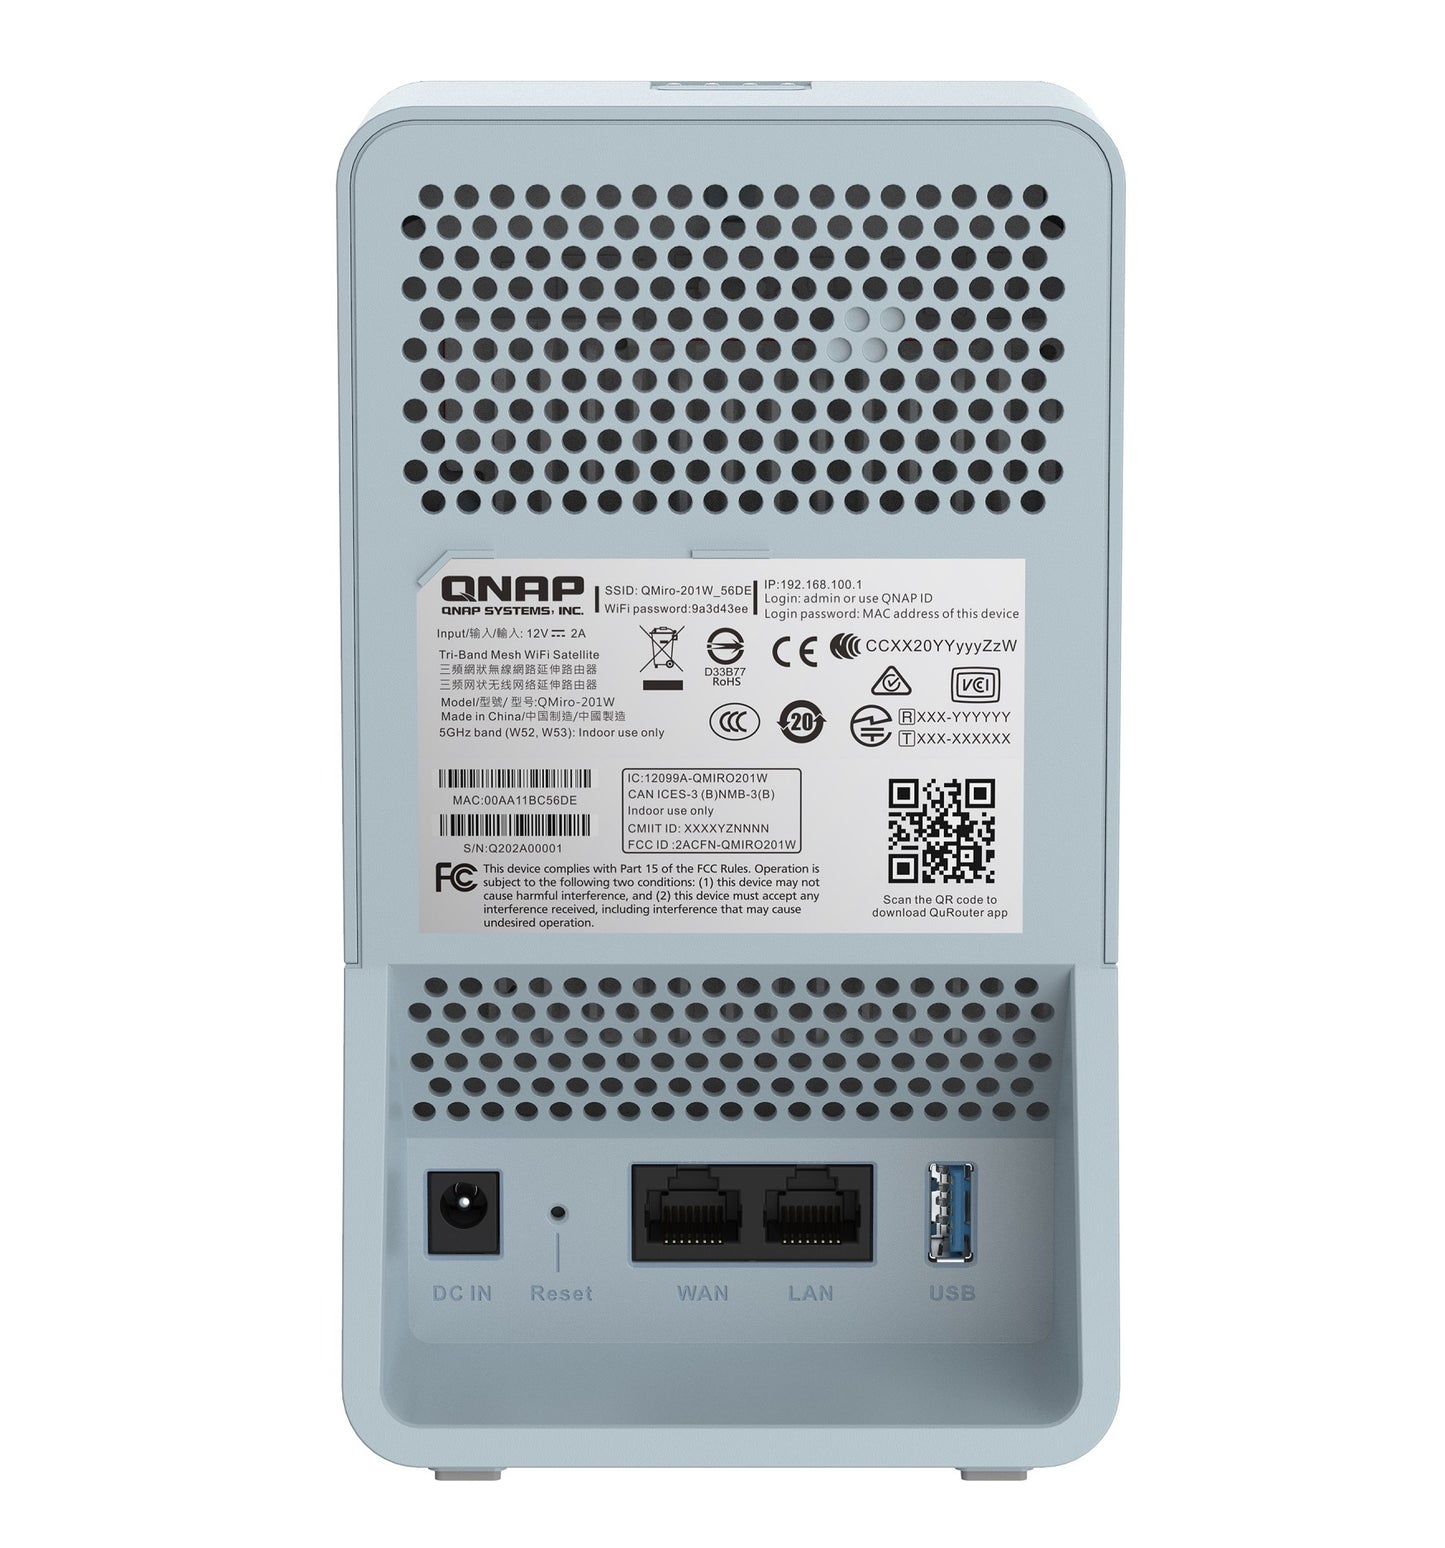 QNAP QMiro-201W Tri-Band Mesh Wi-Fi 5 SD-WAN VPN Router